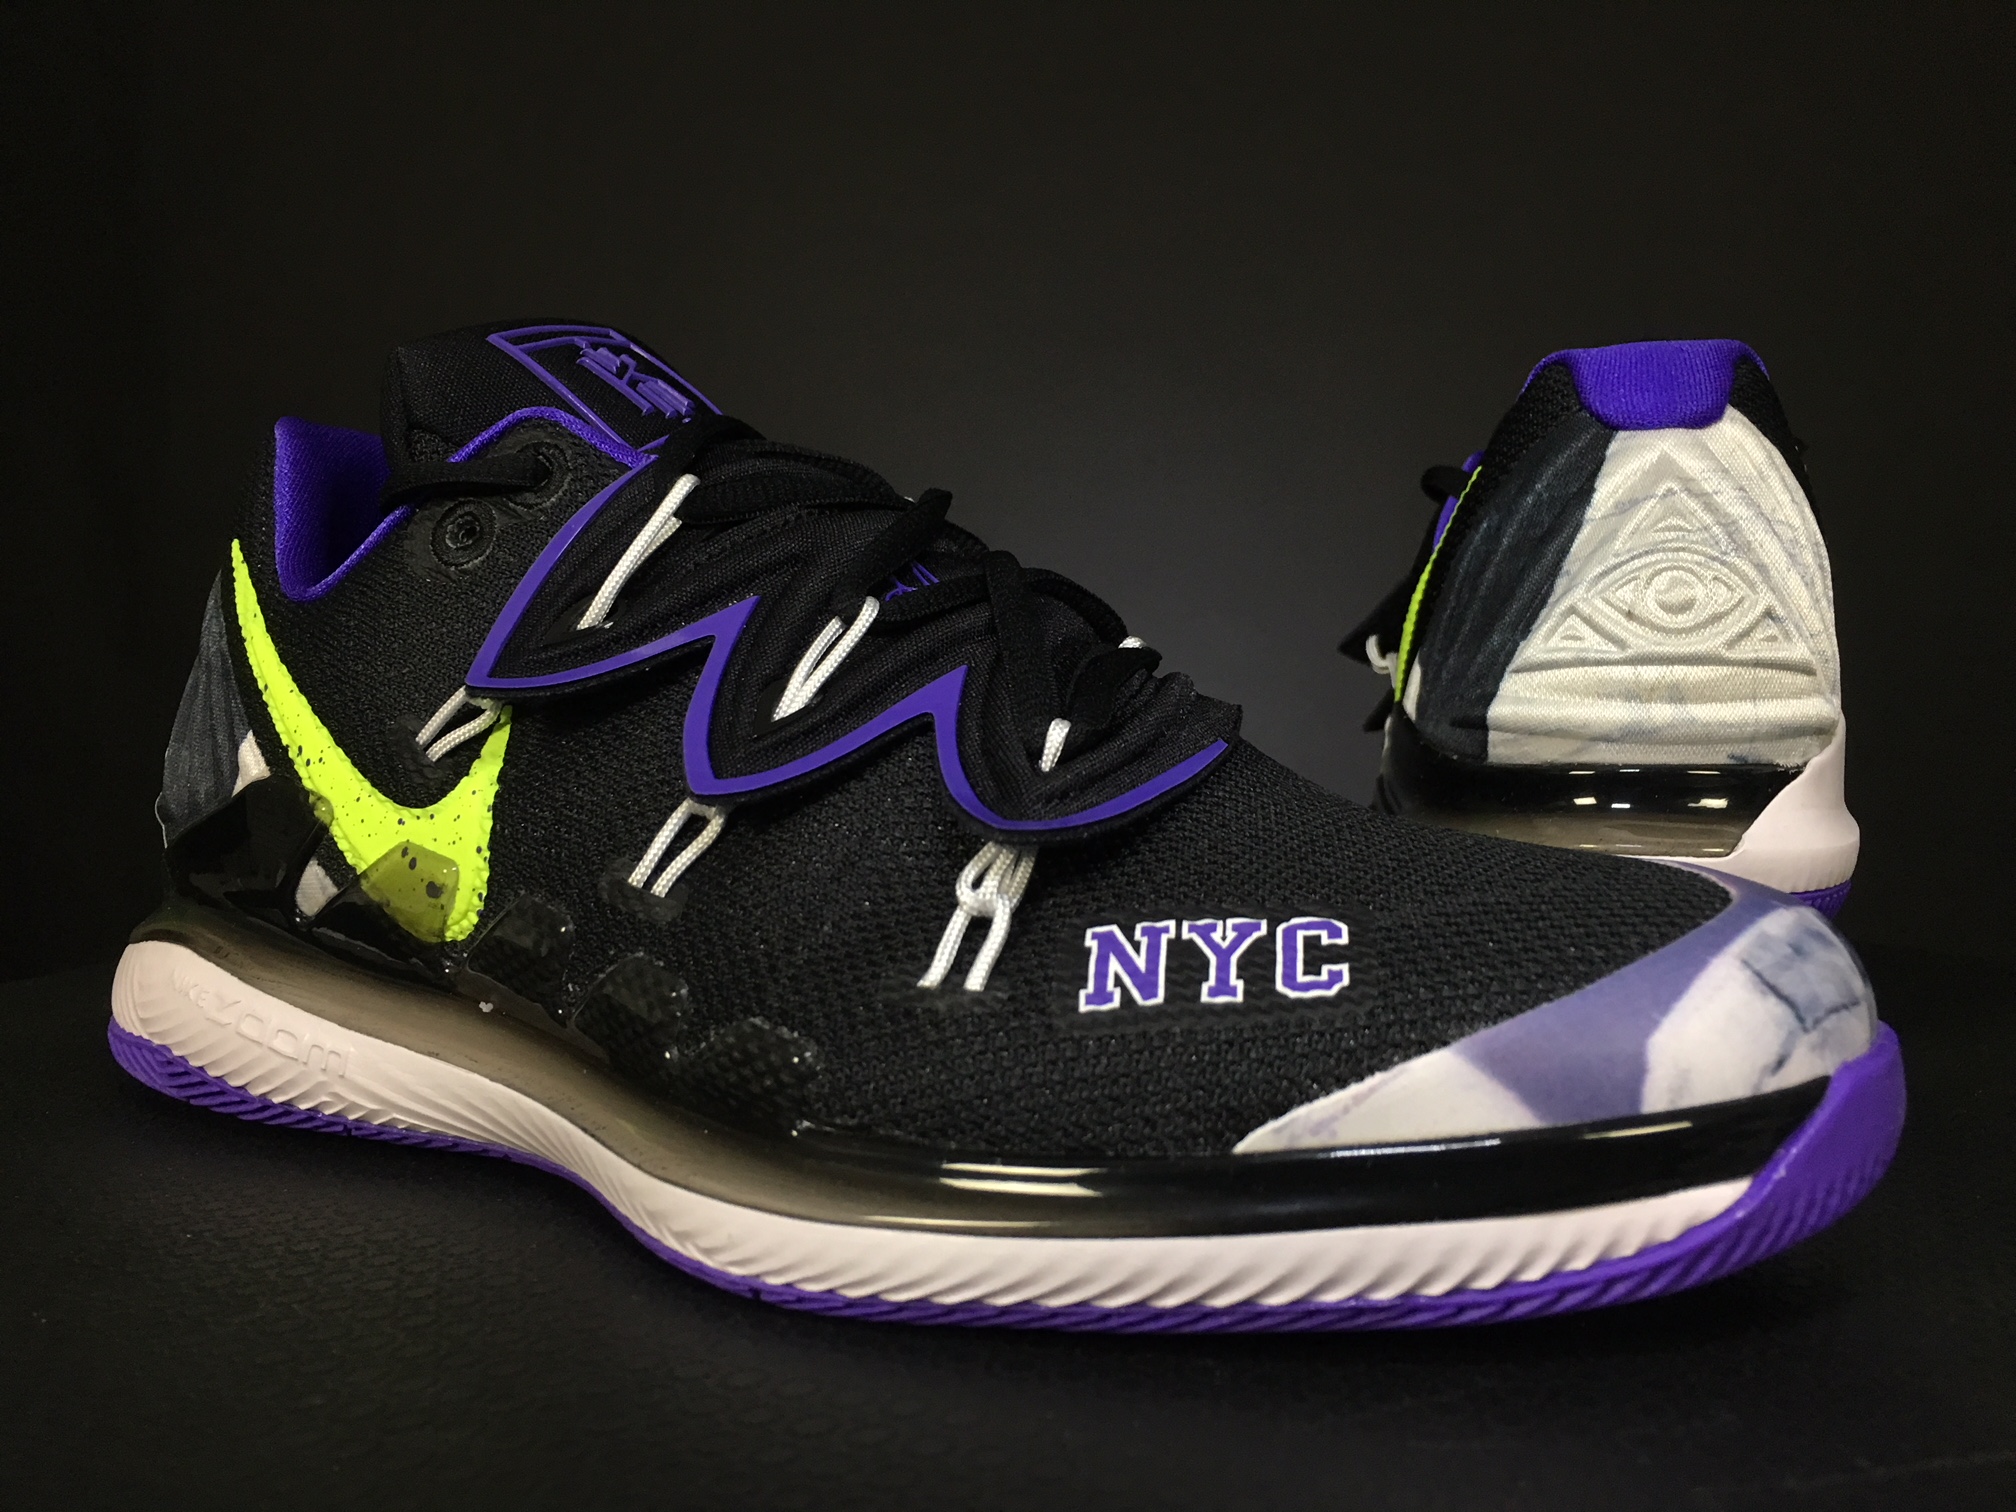 Nick Kyrgios' Vapor X Kyrie V NYC Tennis Shoes - TENNIS EXPRESS BLOG